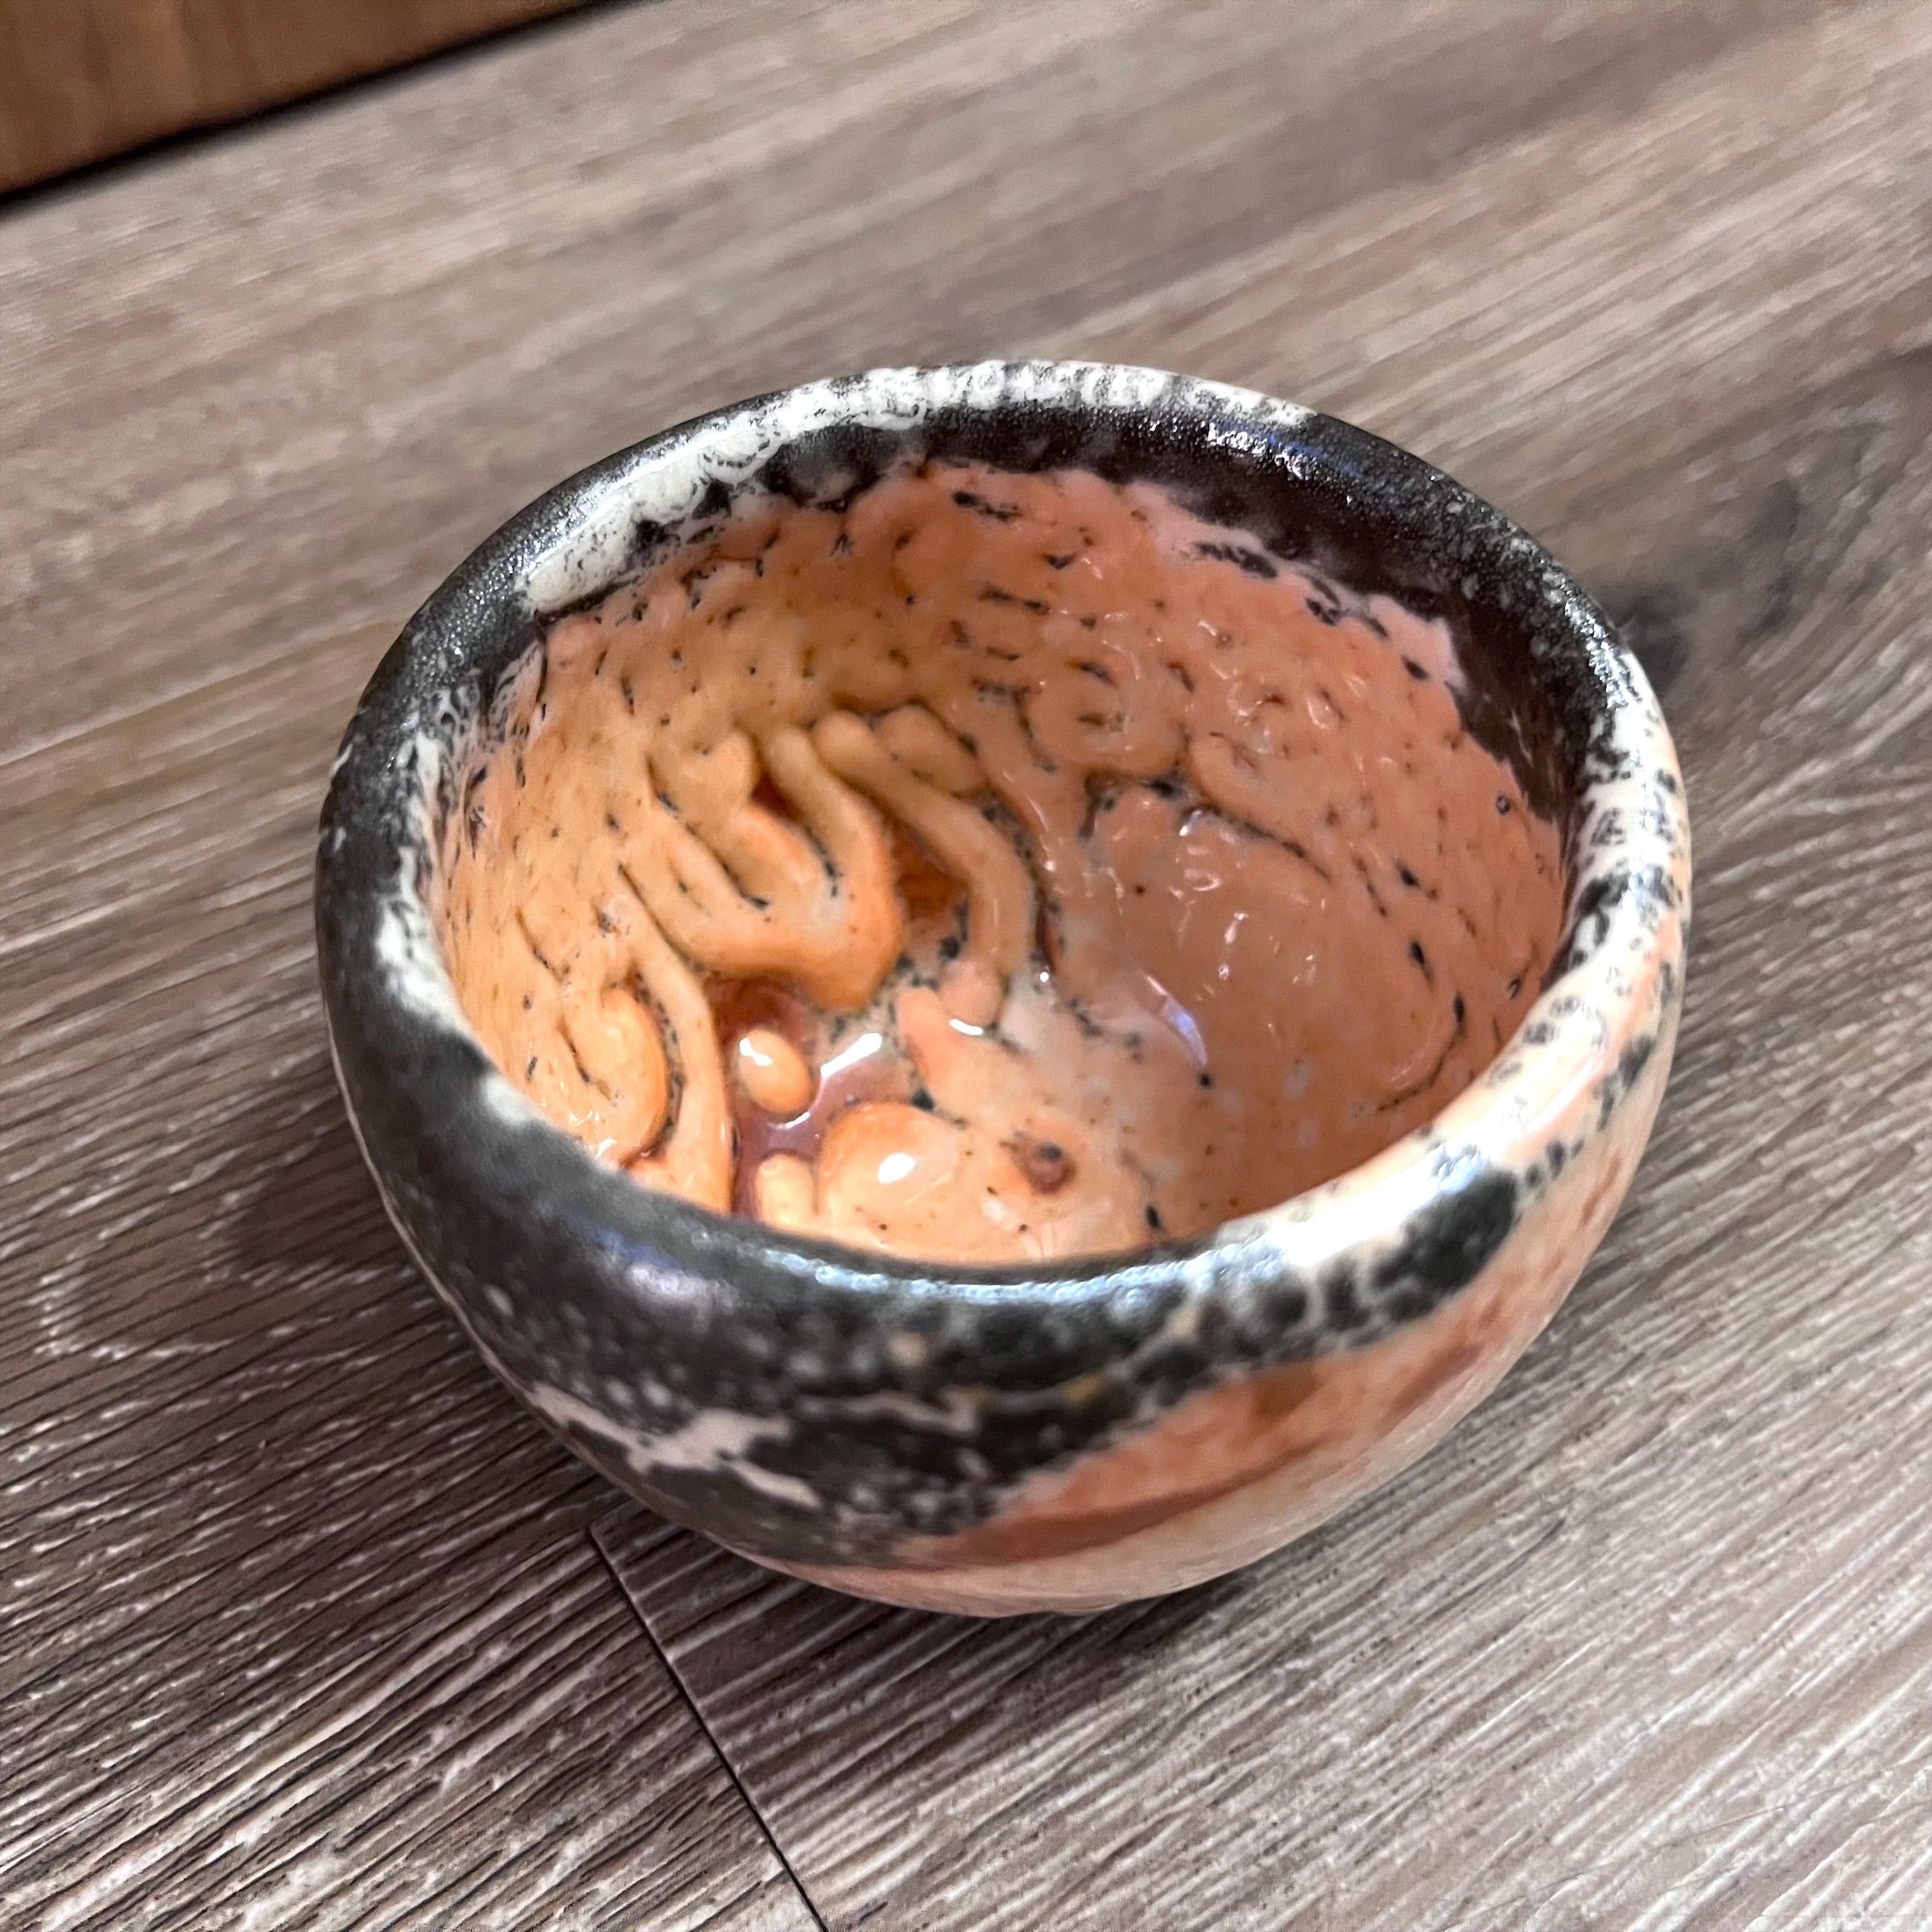 Taiwanese Handmade Wood-Fired Ceramic Teacup - Rocky Shore